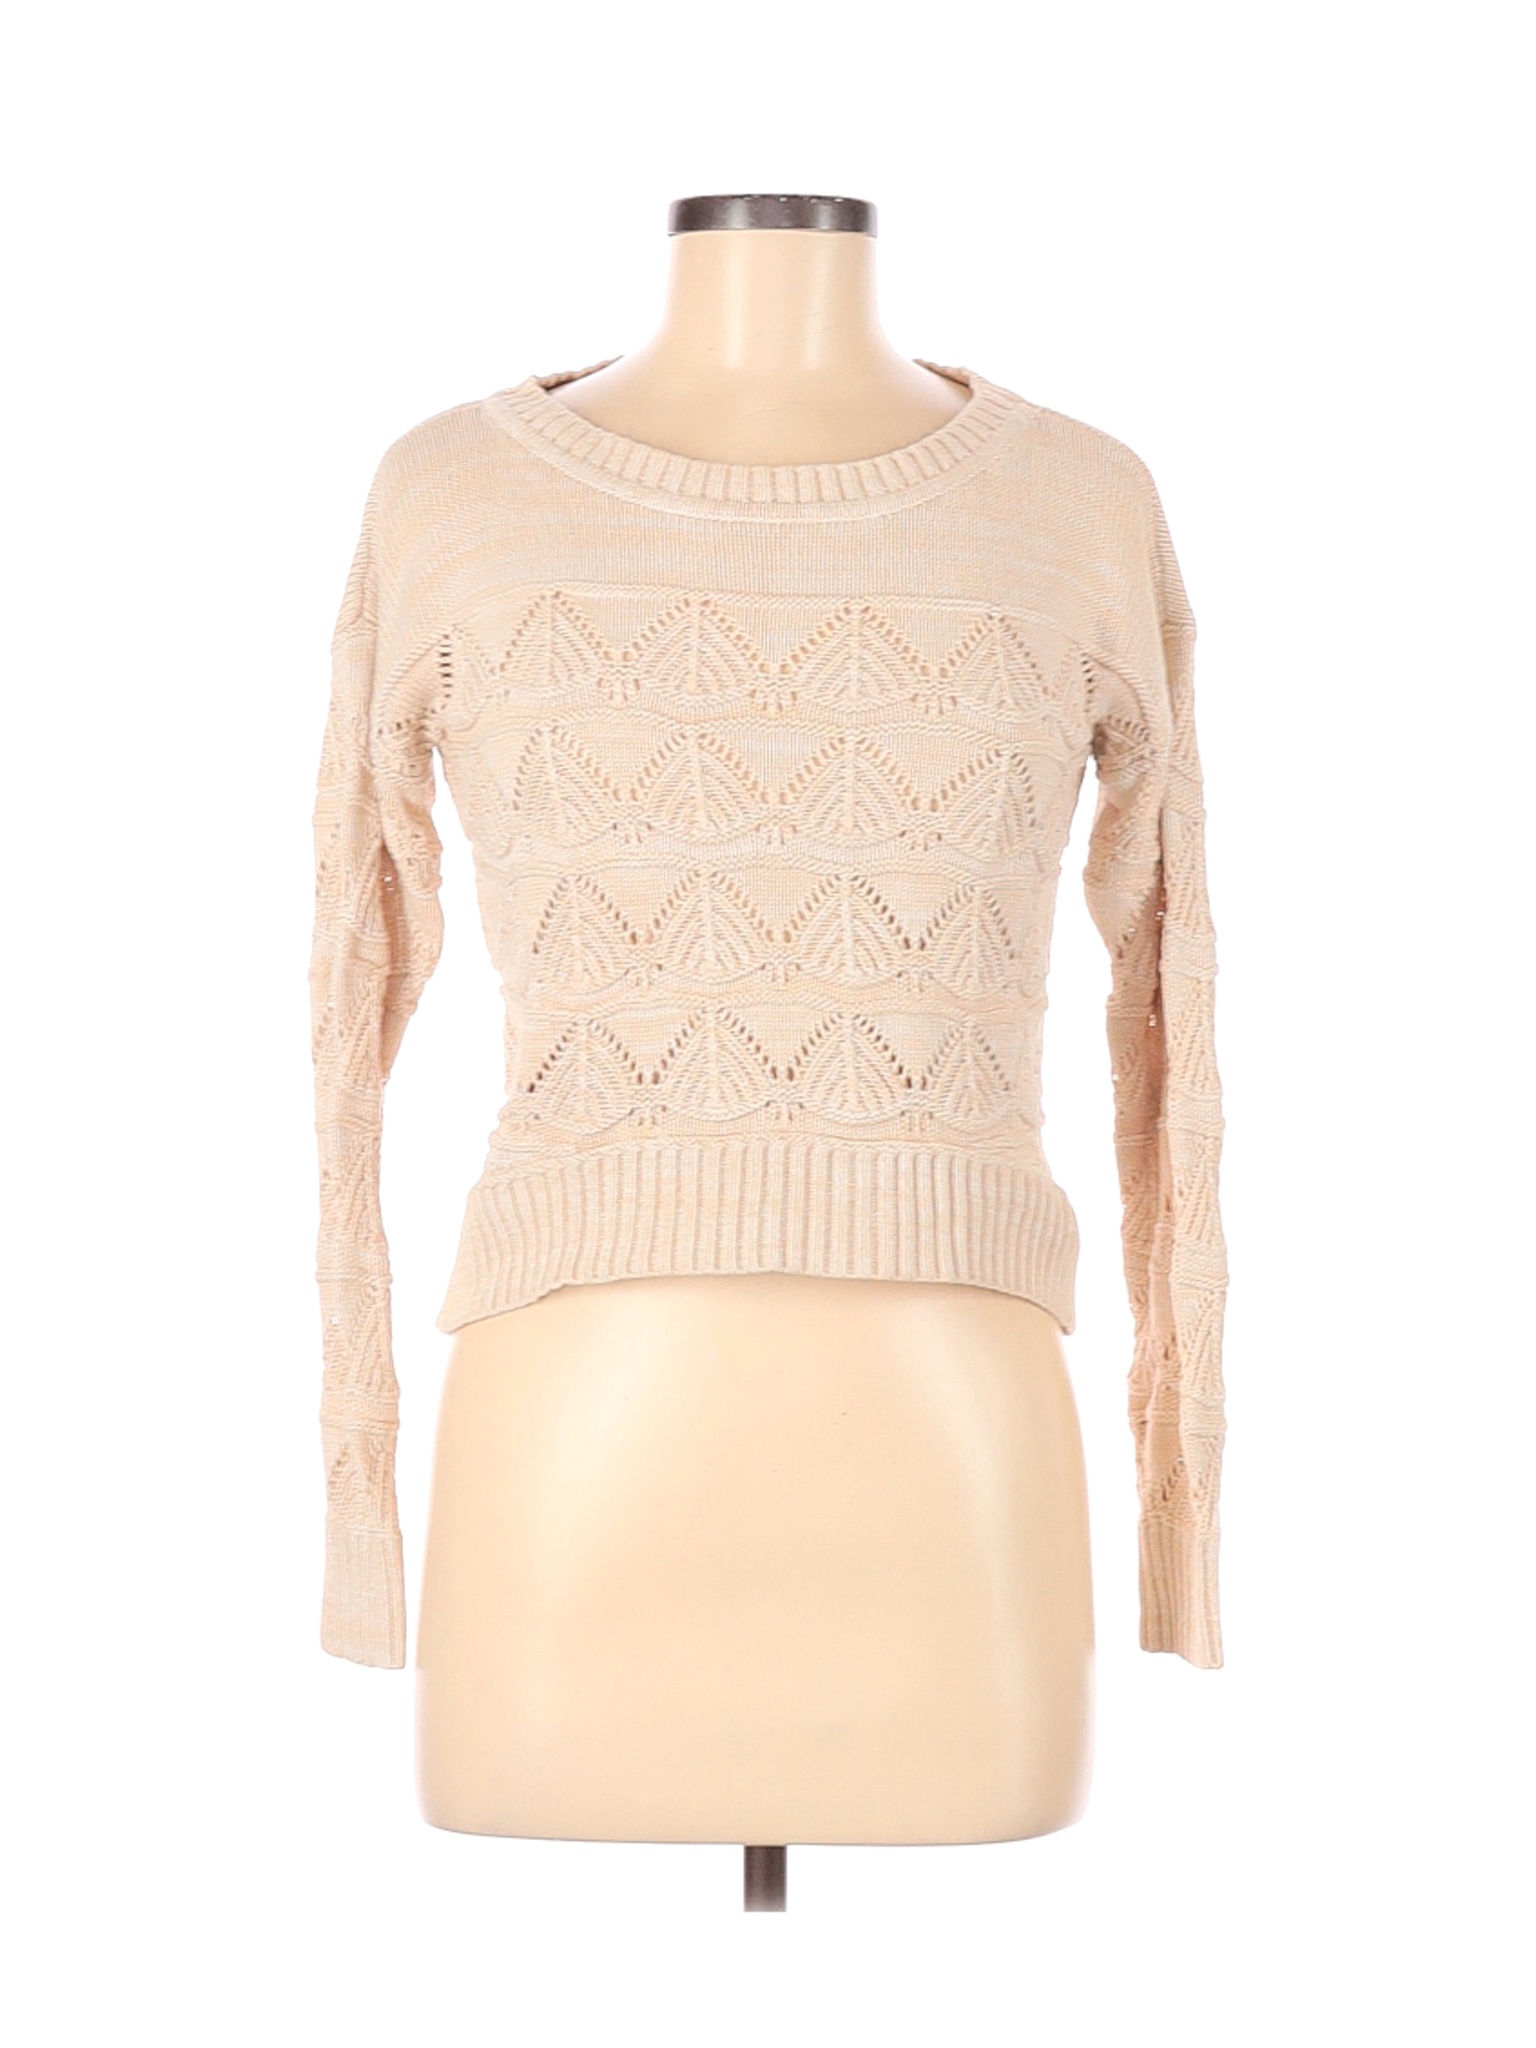 Forever 21 Women Brown Pullover Sweater M | eBay